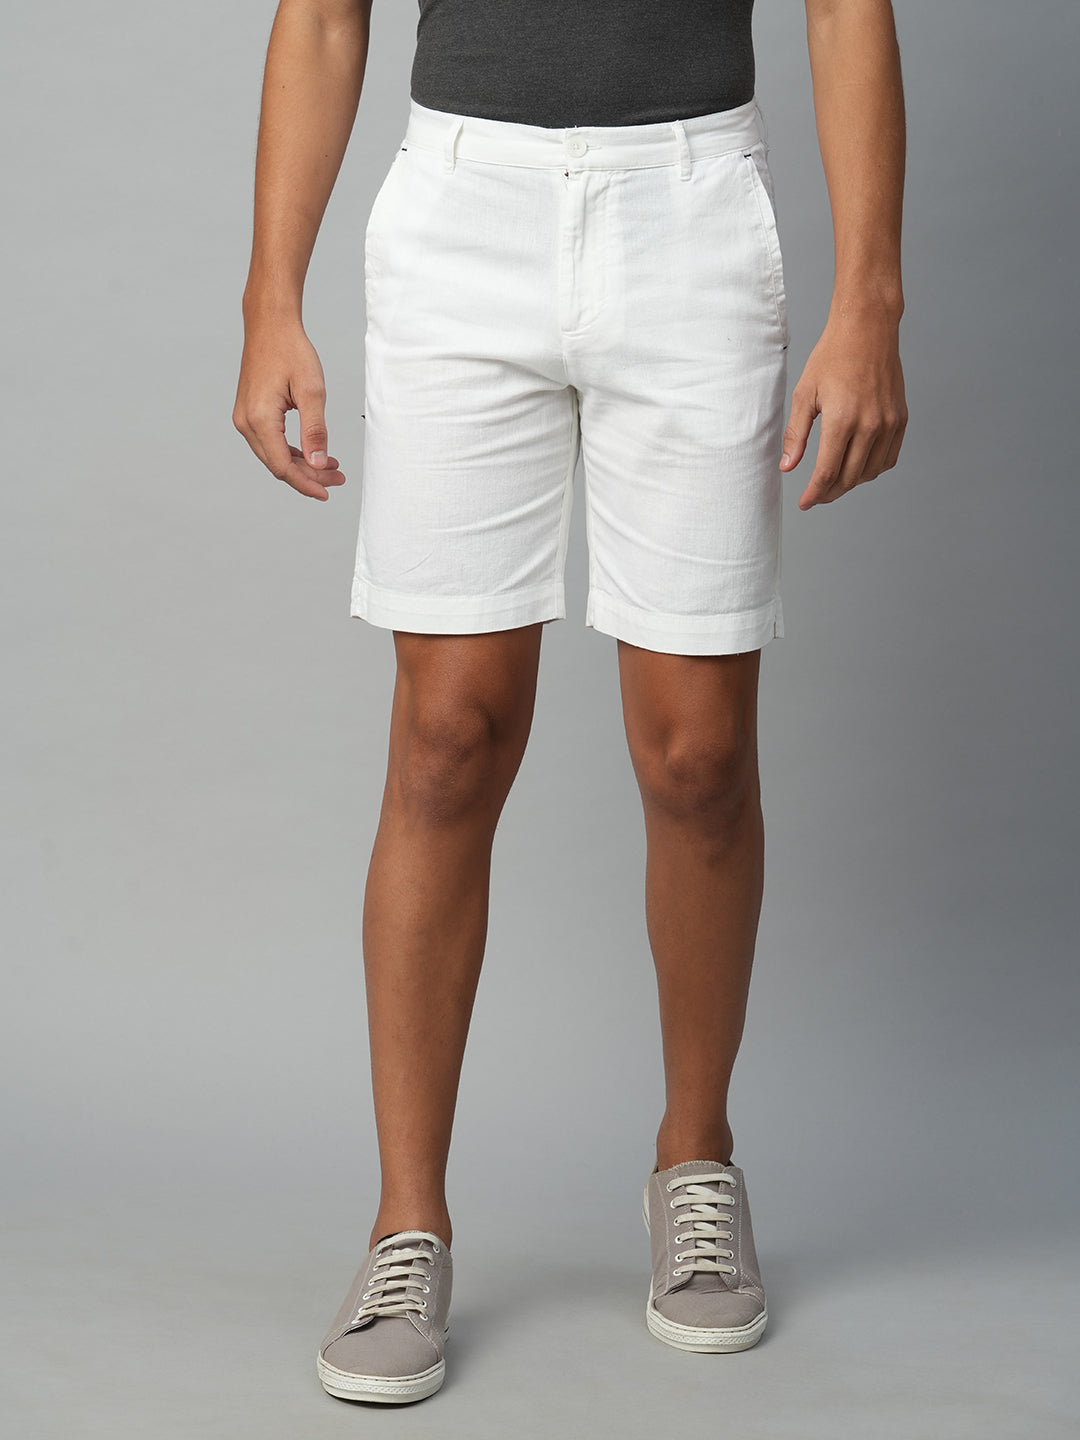 Men's Cotton Linen White Regular Fit Shorts